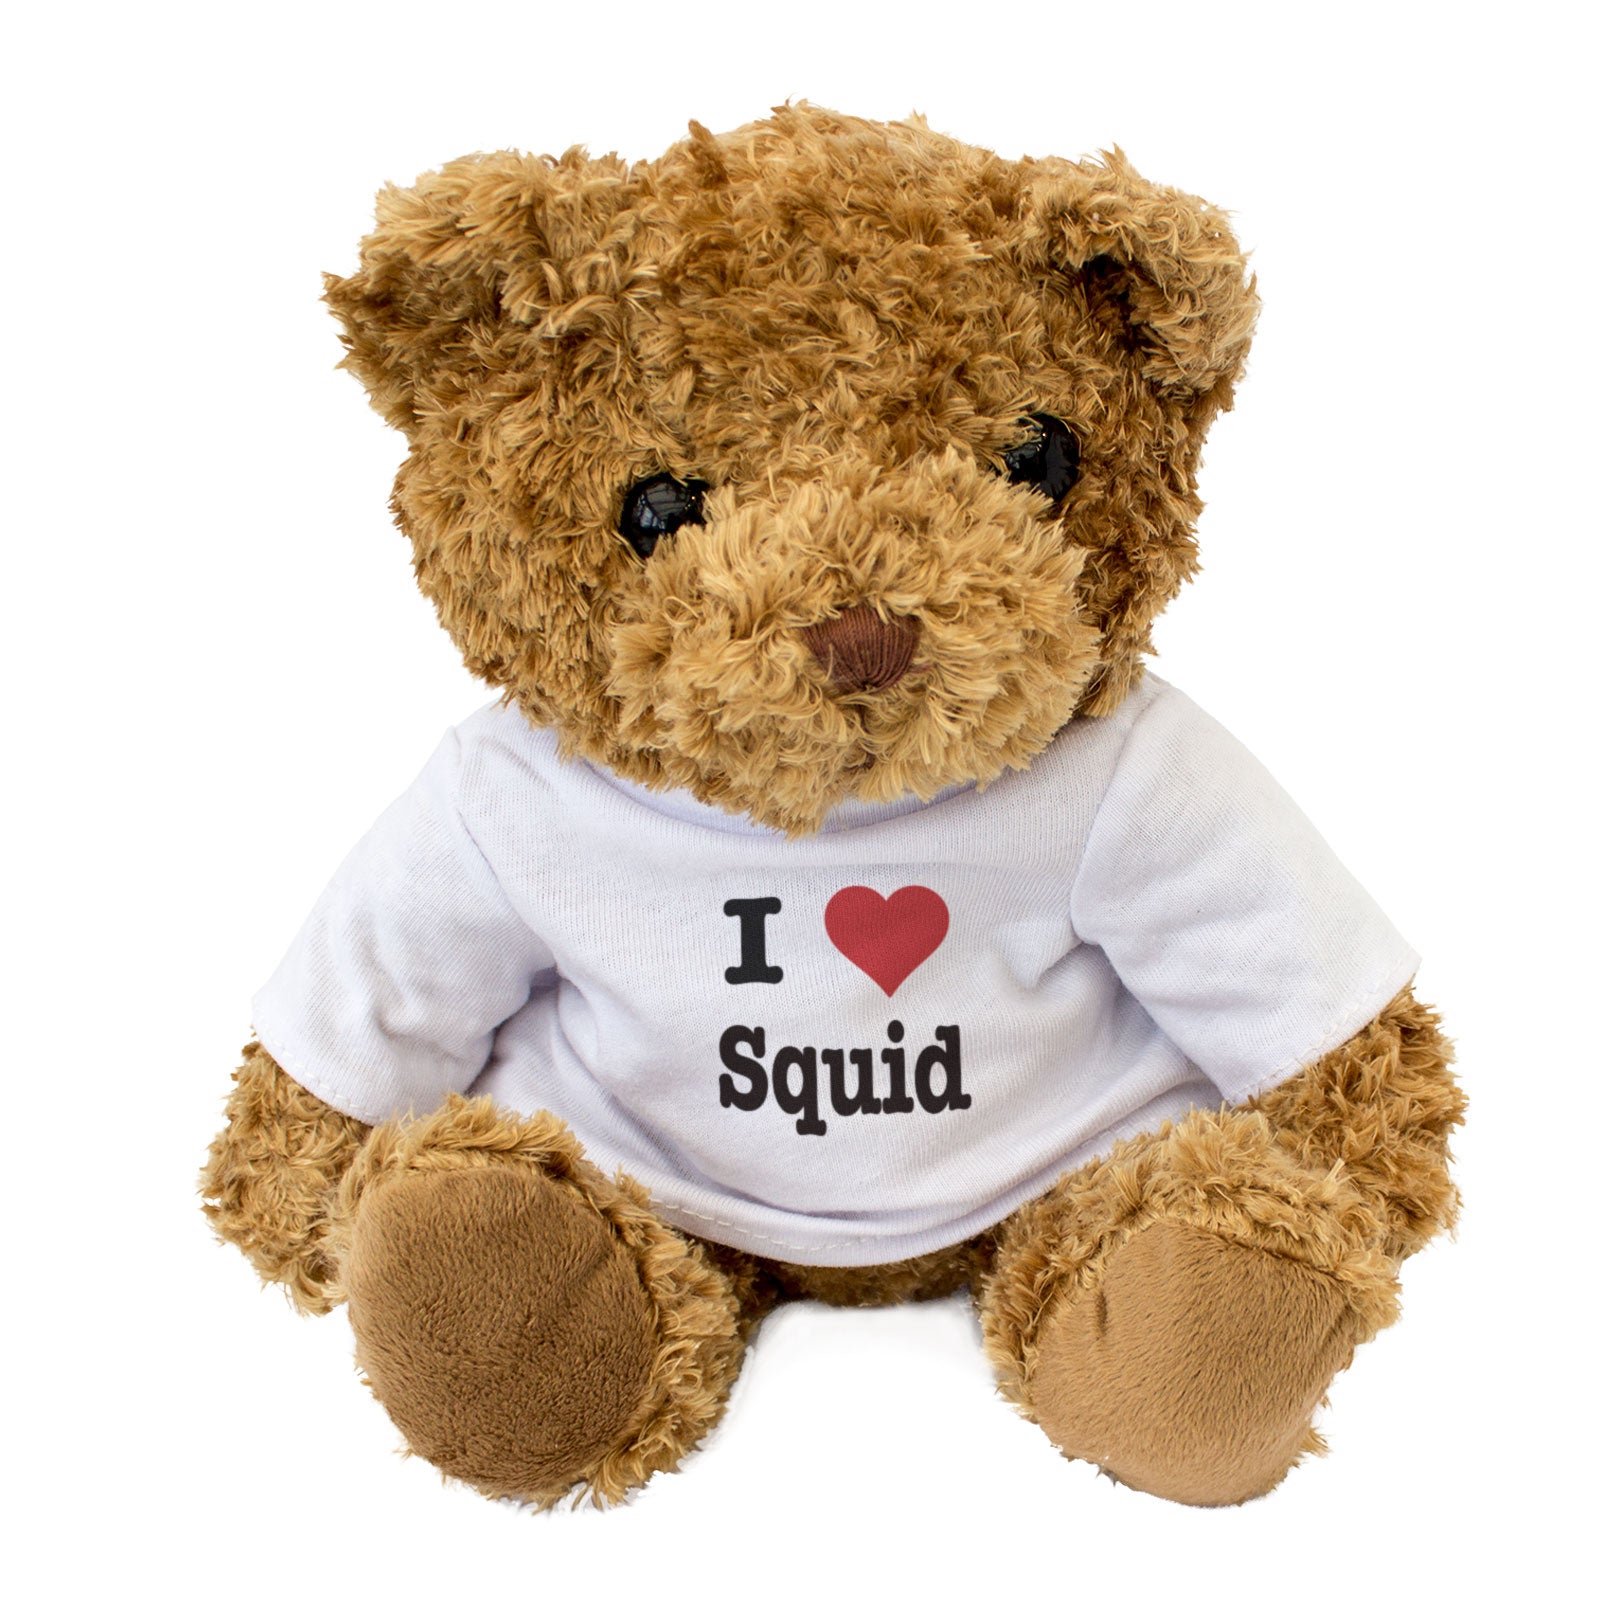 I Love Squid - Teddy Bear